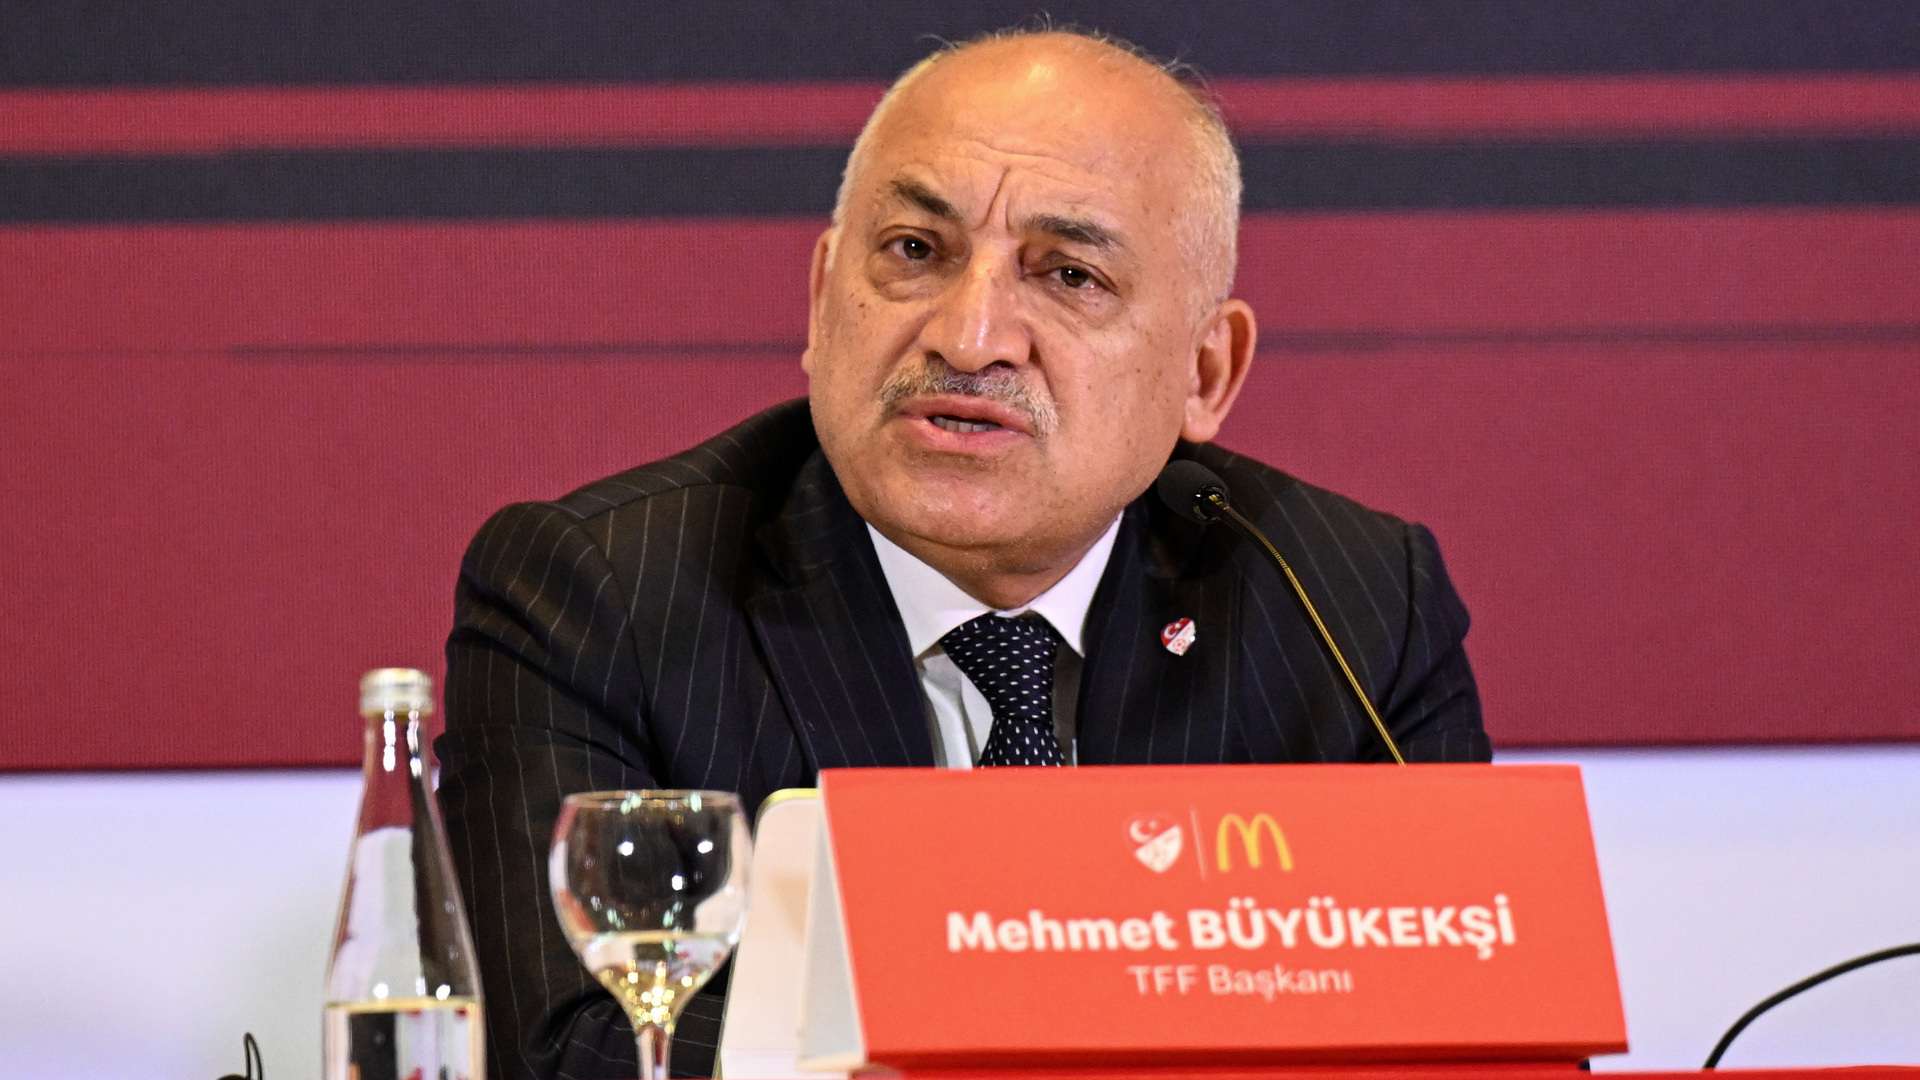 Mehmet Buyukeksi